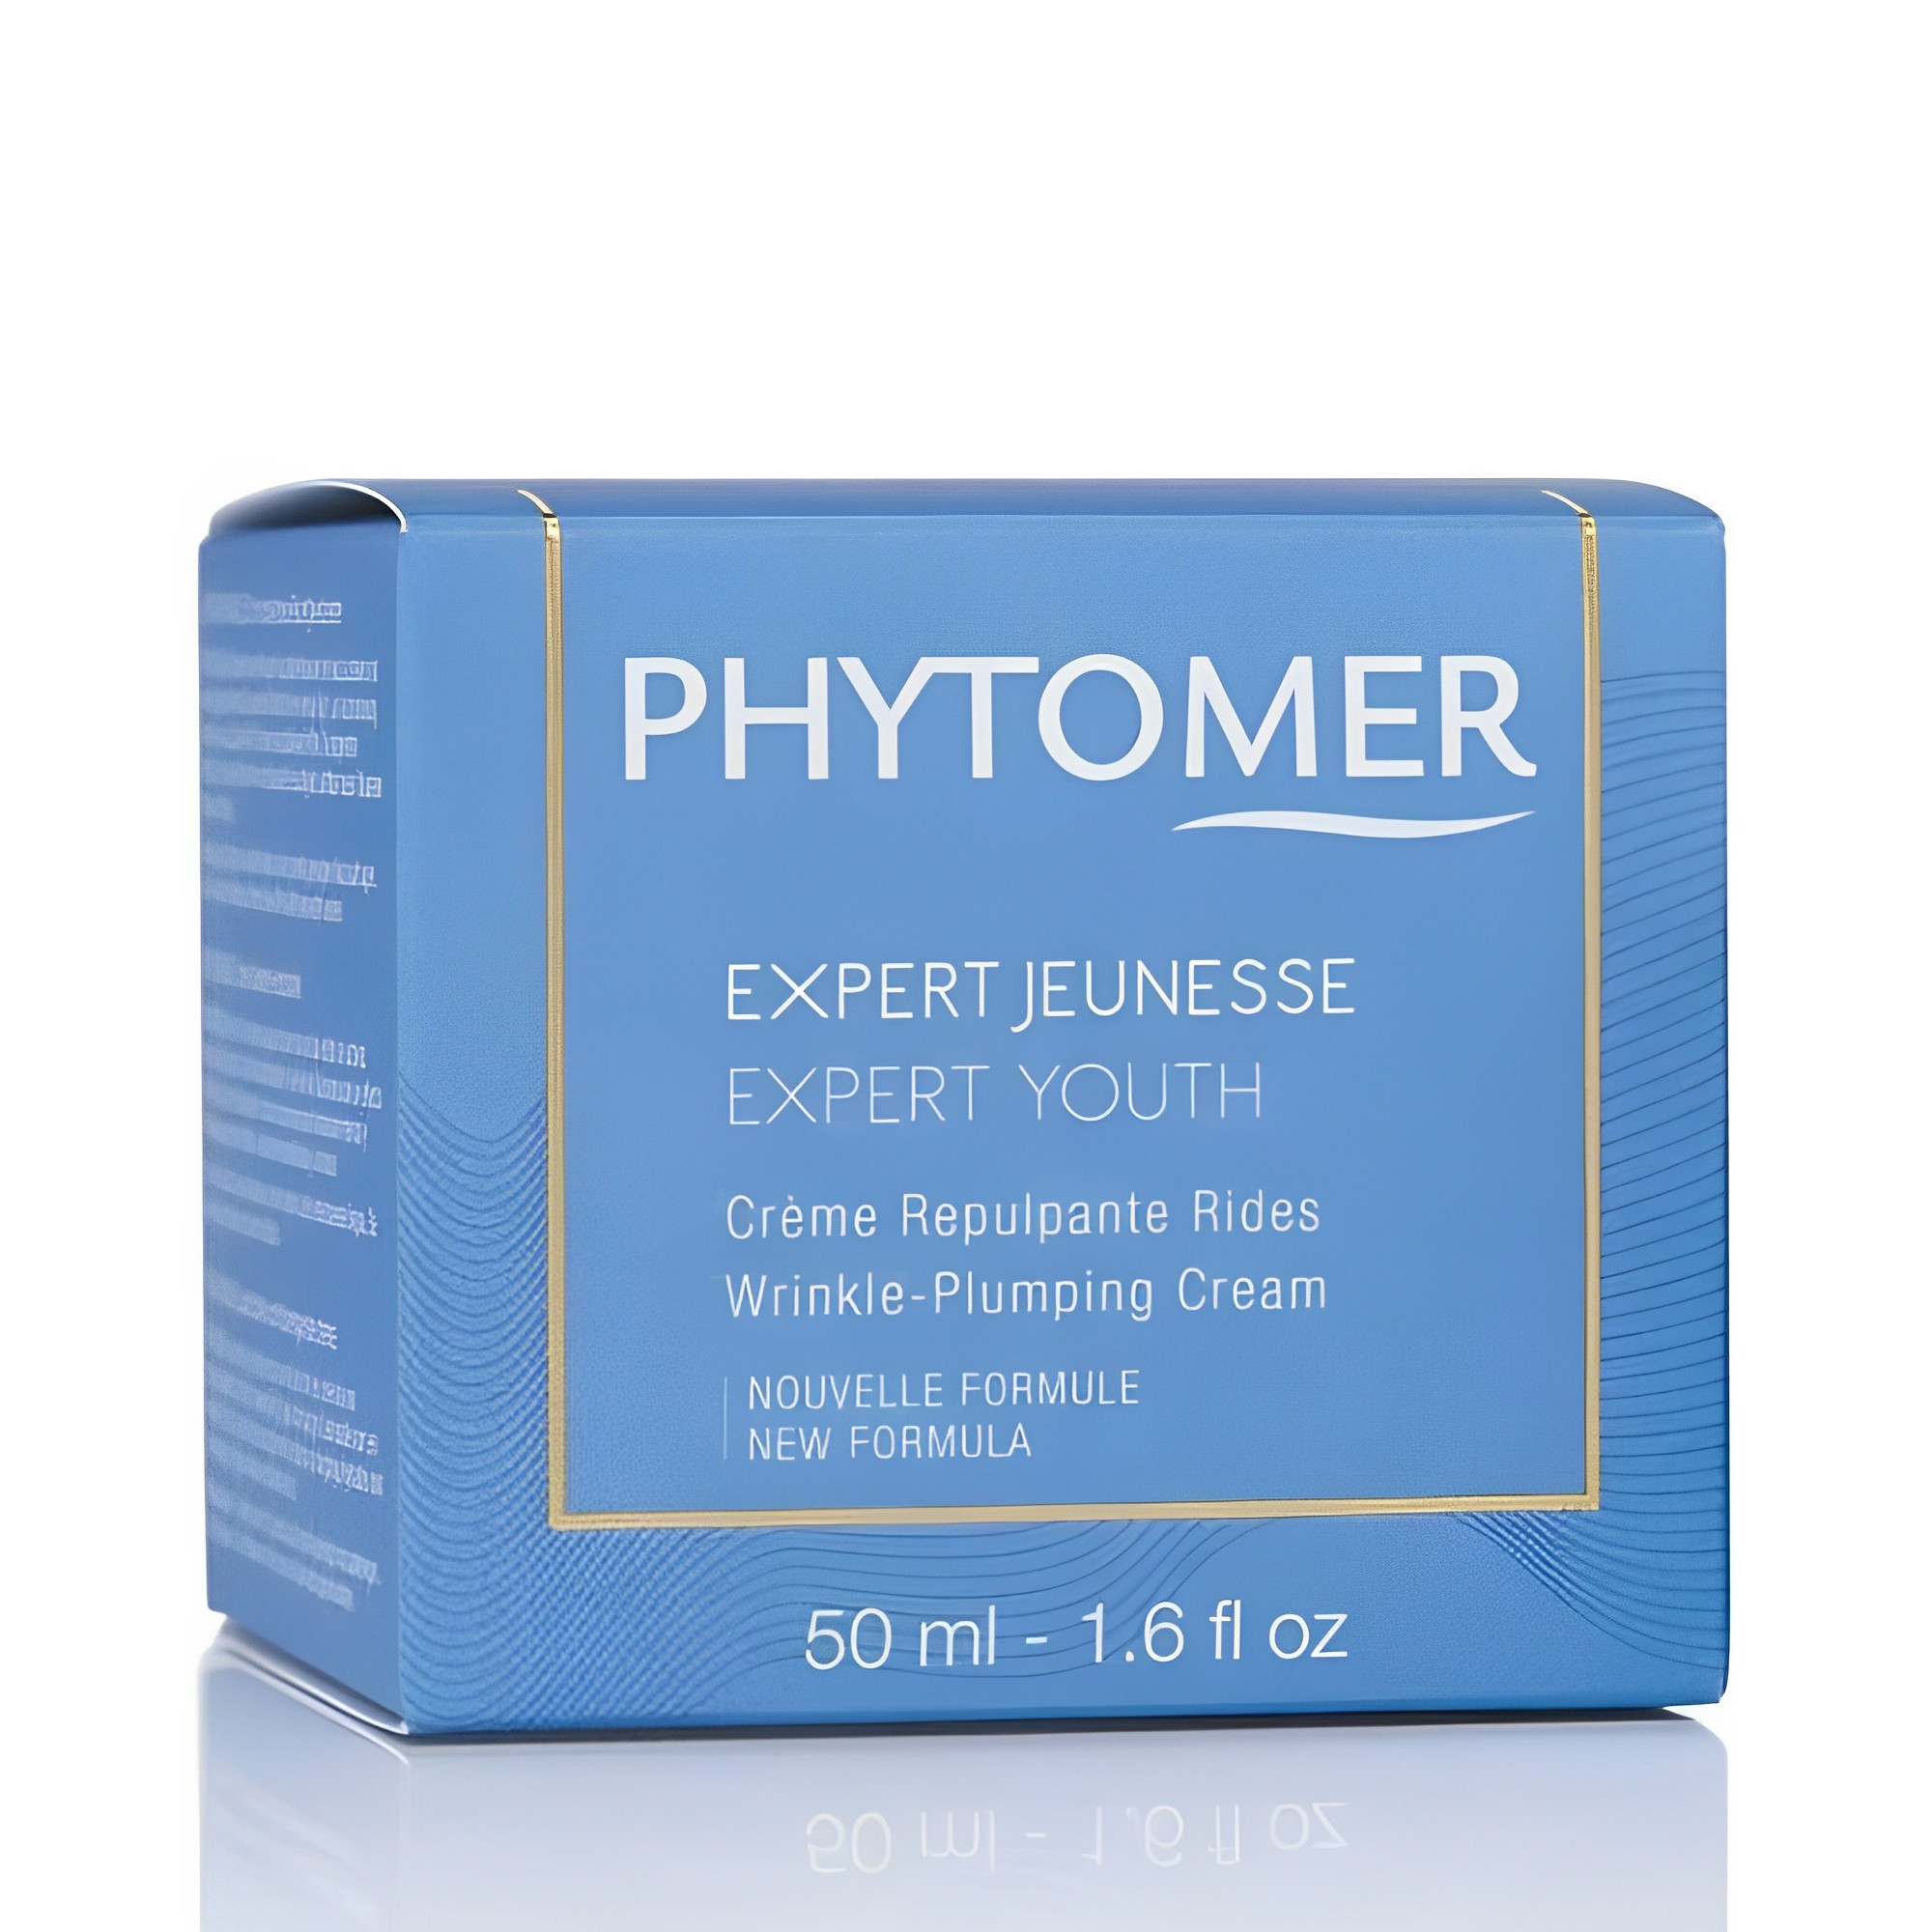 Зміцнюючий крем, що омолоджує (Нова формула) Phytomer Expert Youth Wrinkle-Plumping Cream (New Formula)